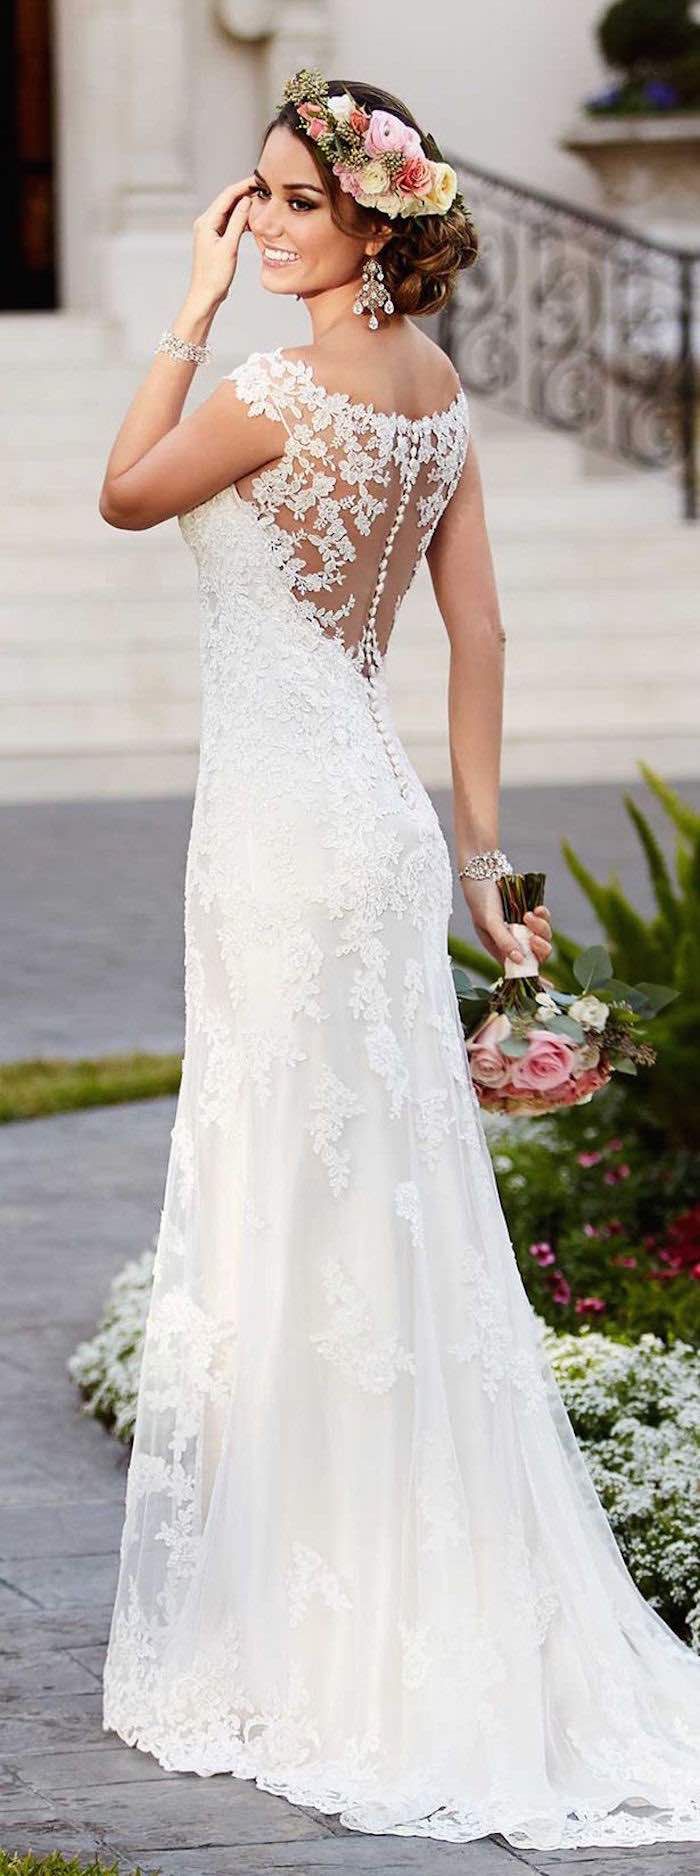 25 Stunning Lace Wedding Dresses Ideas Wohh Wedding 2983